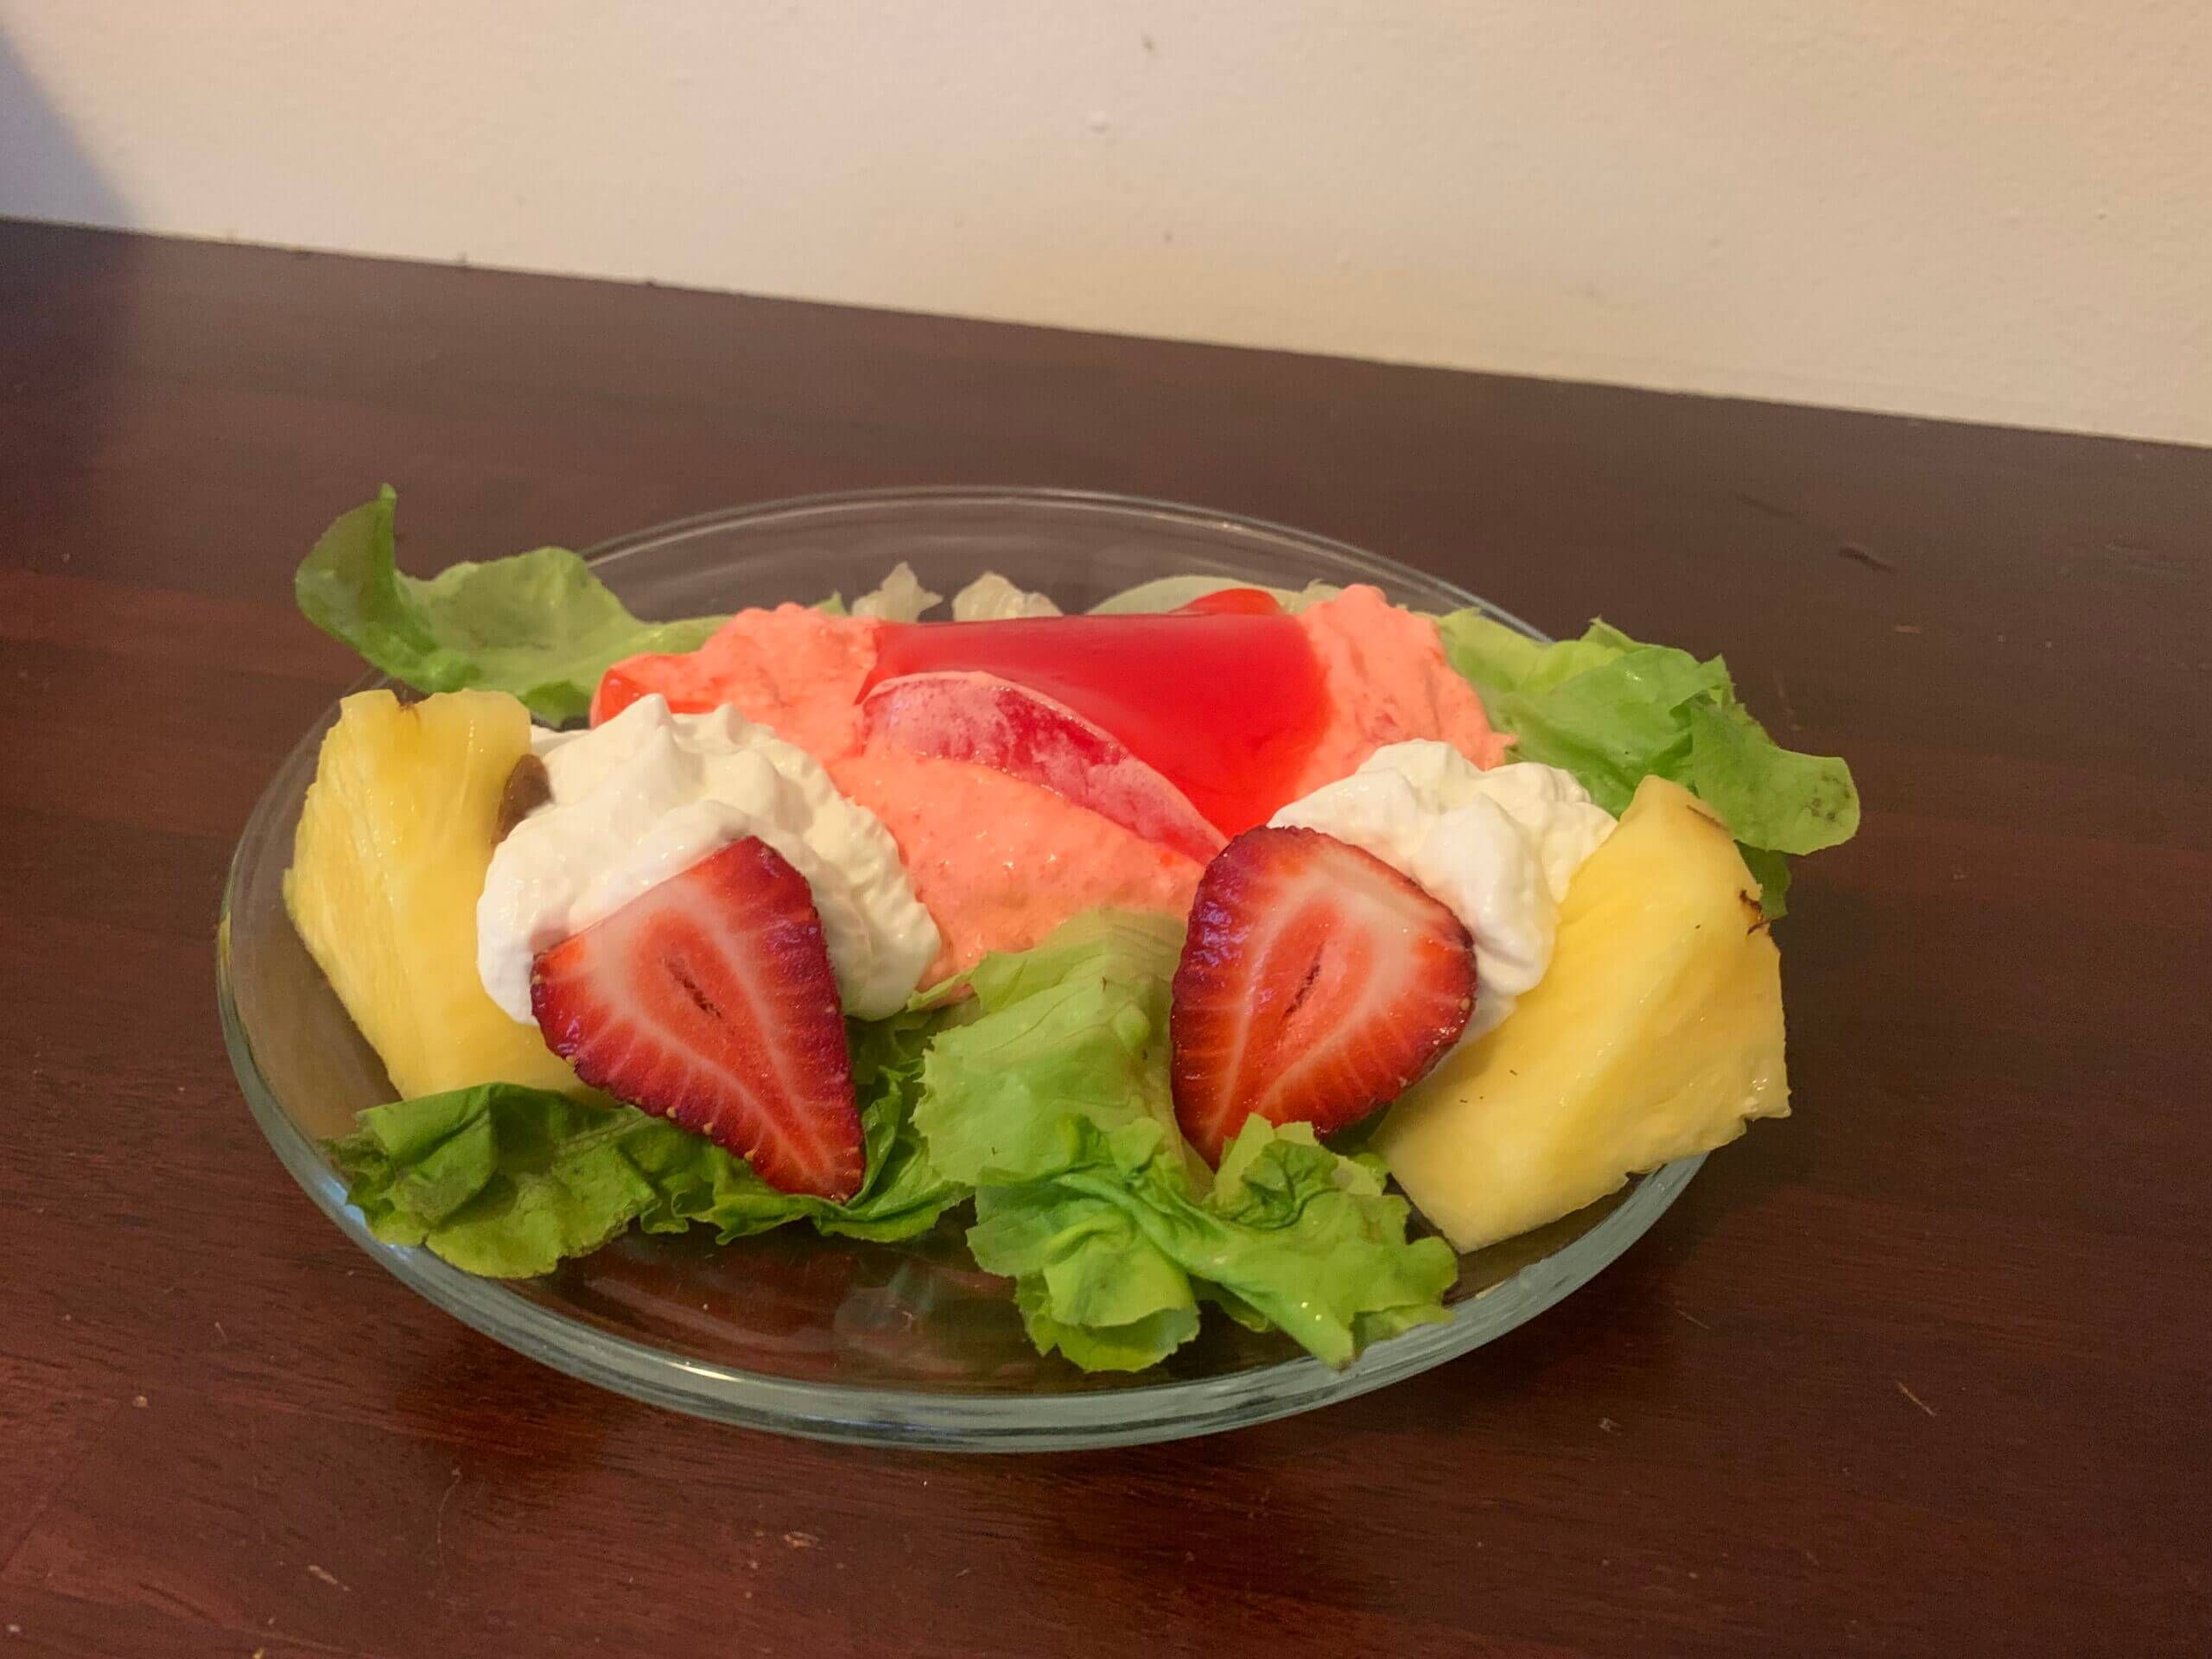 Plate of salad